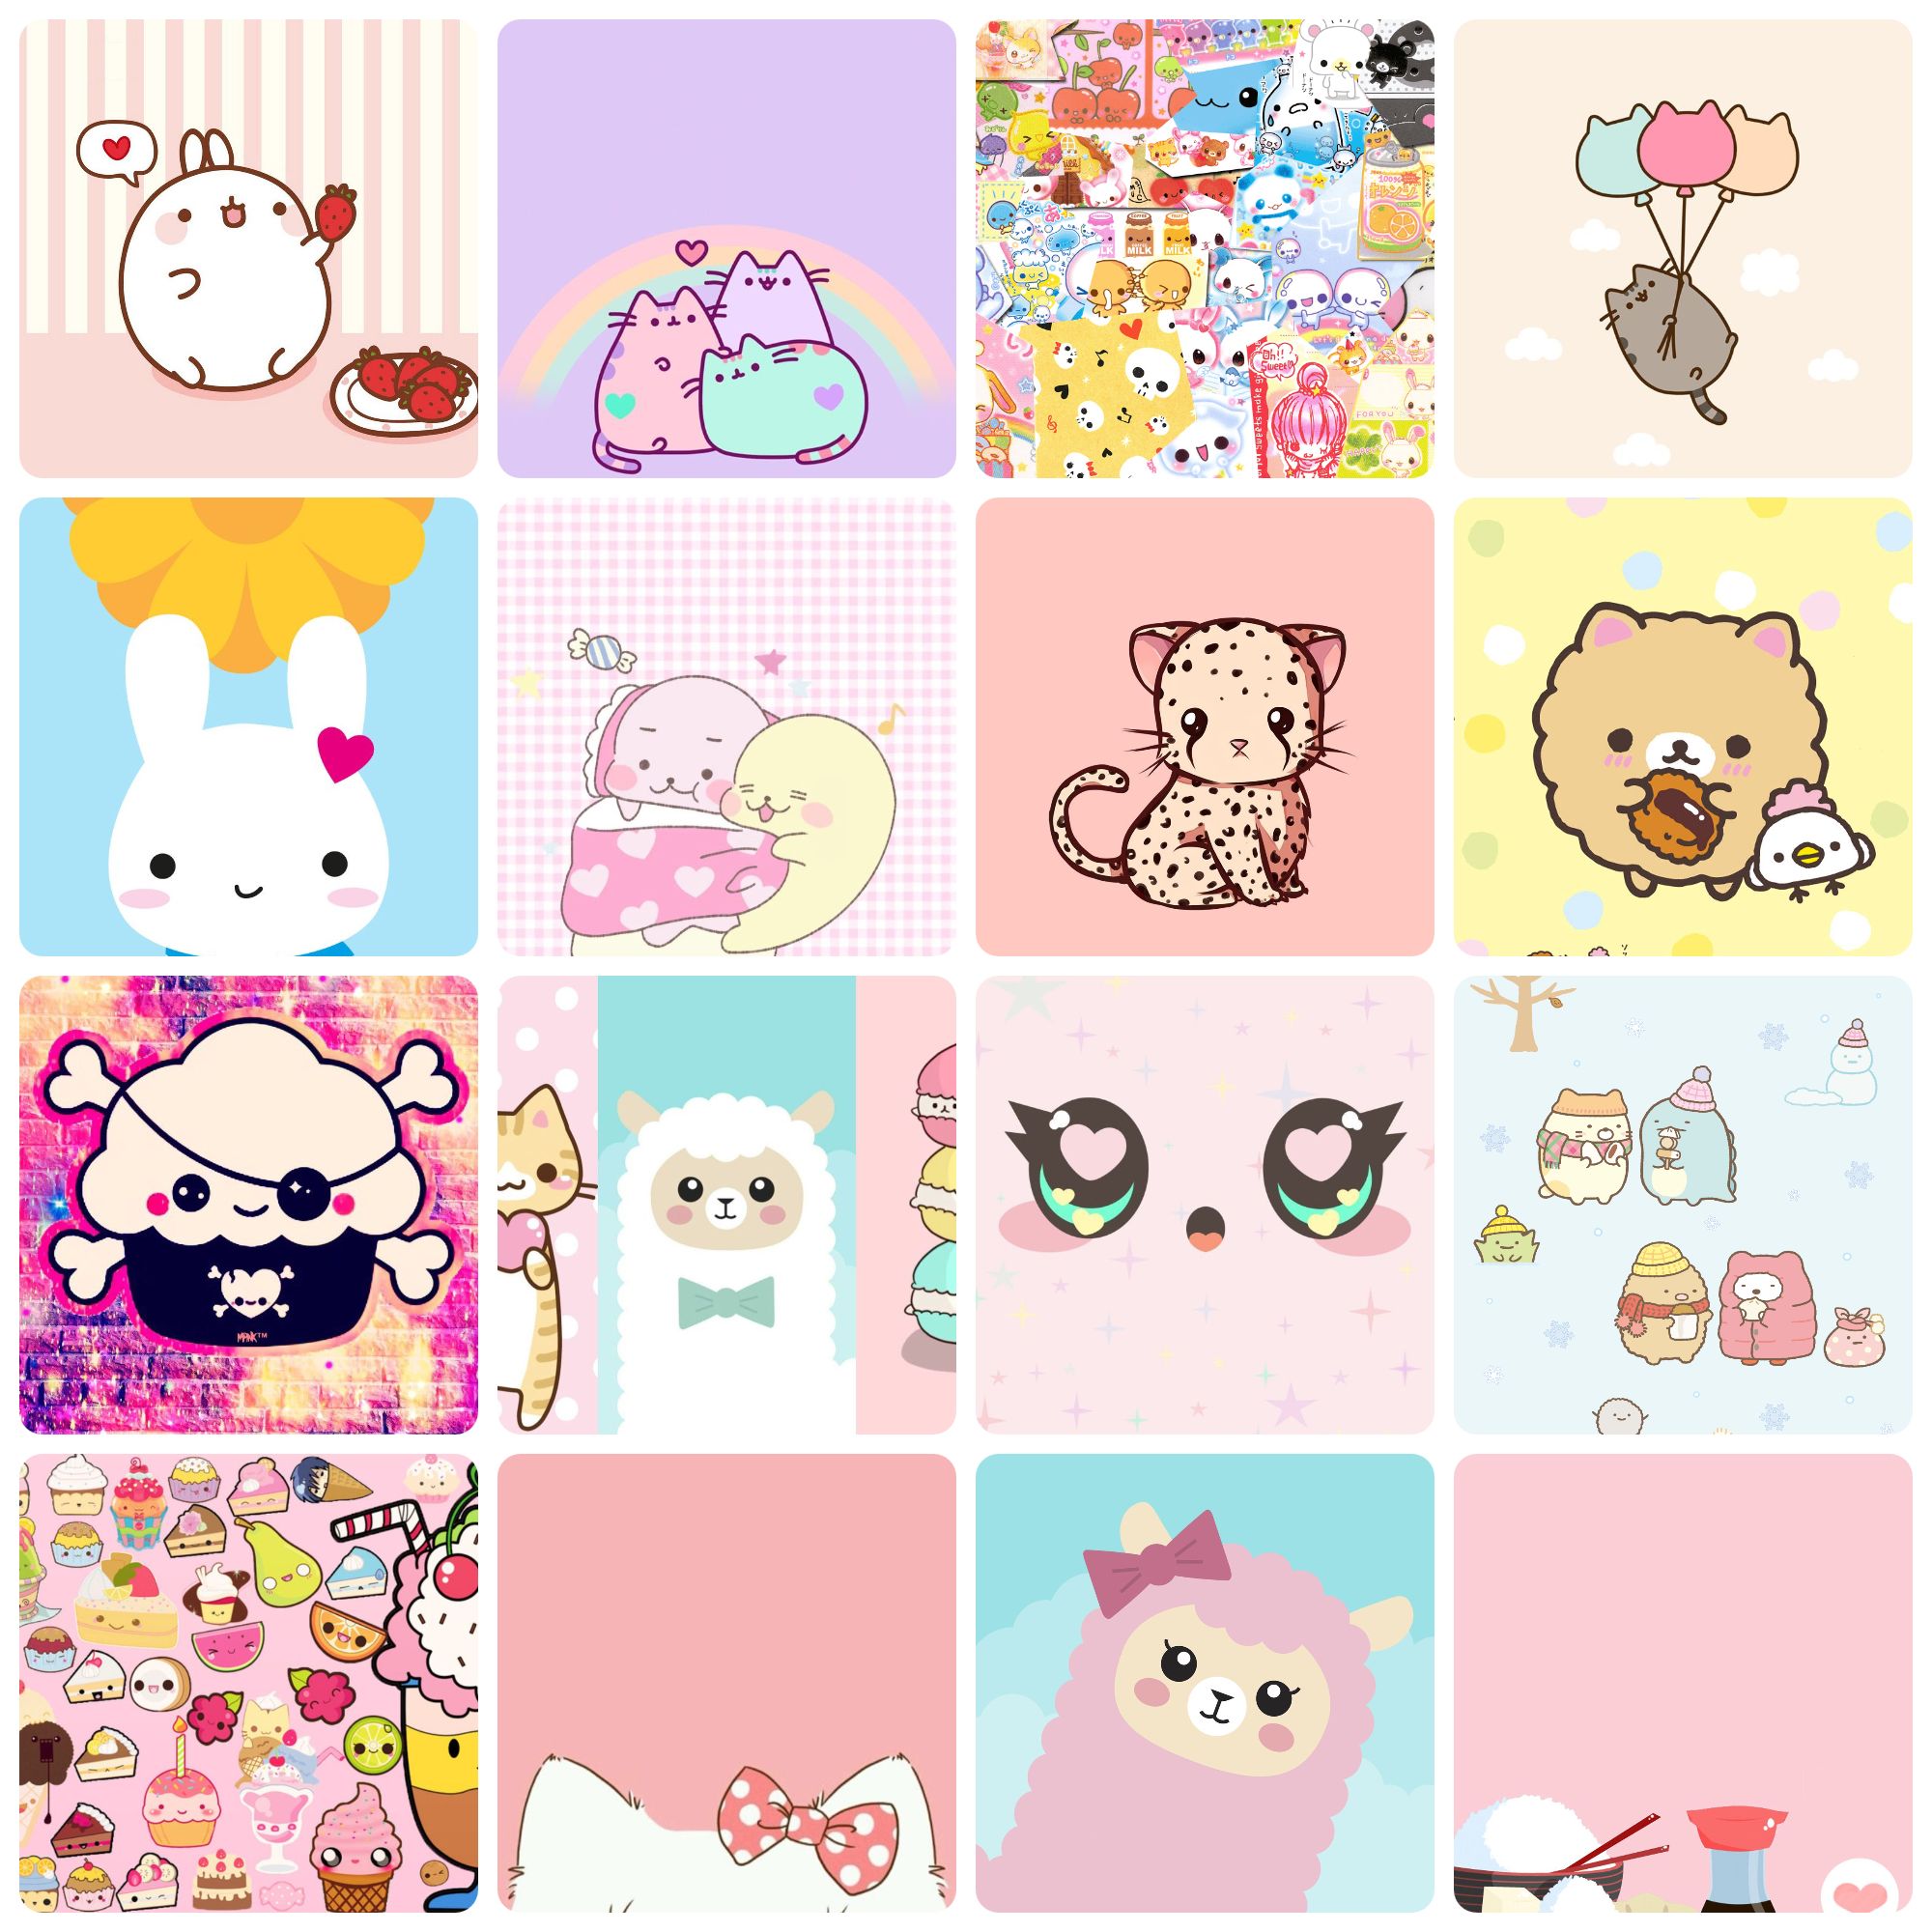 Download Cute Kawaii Wallpapers